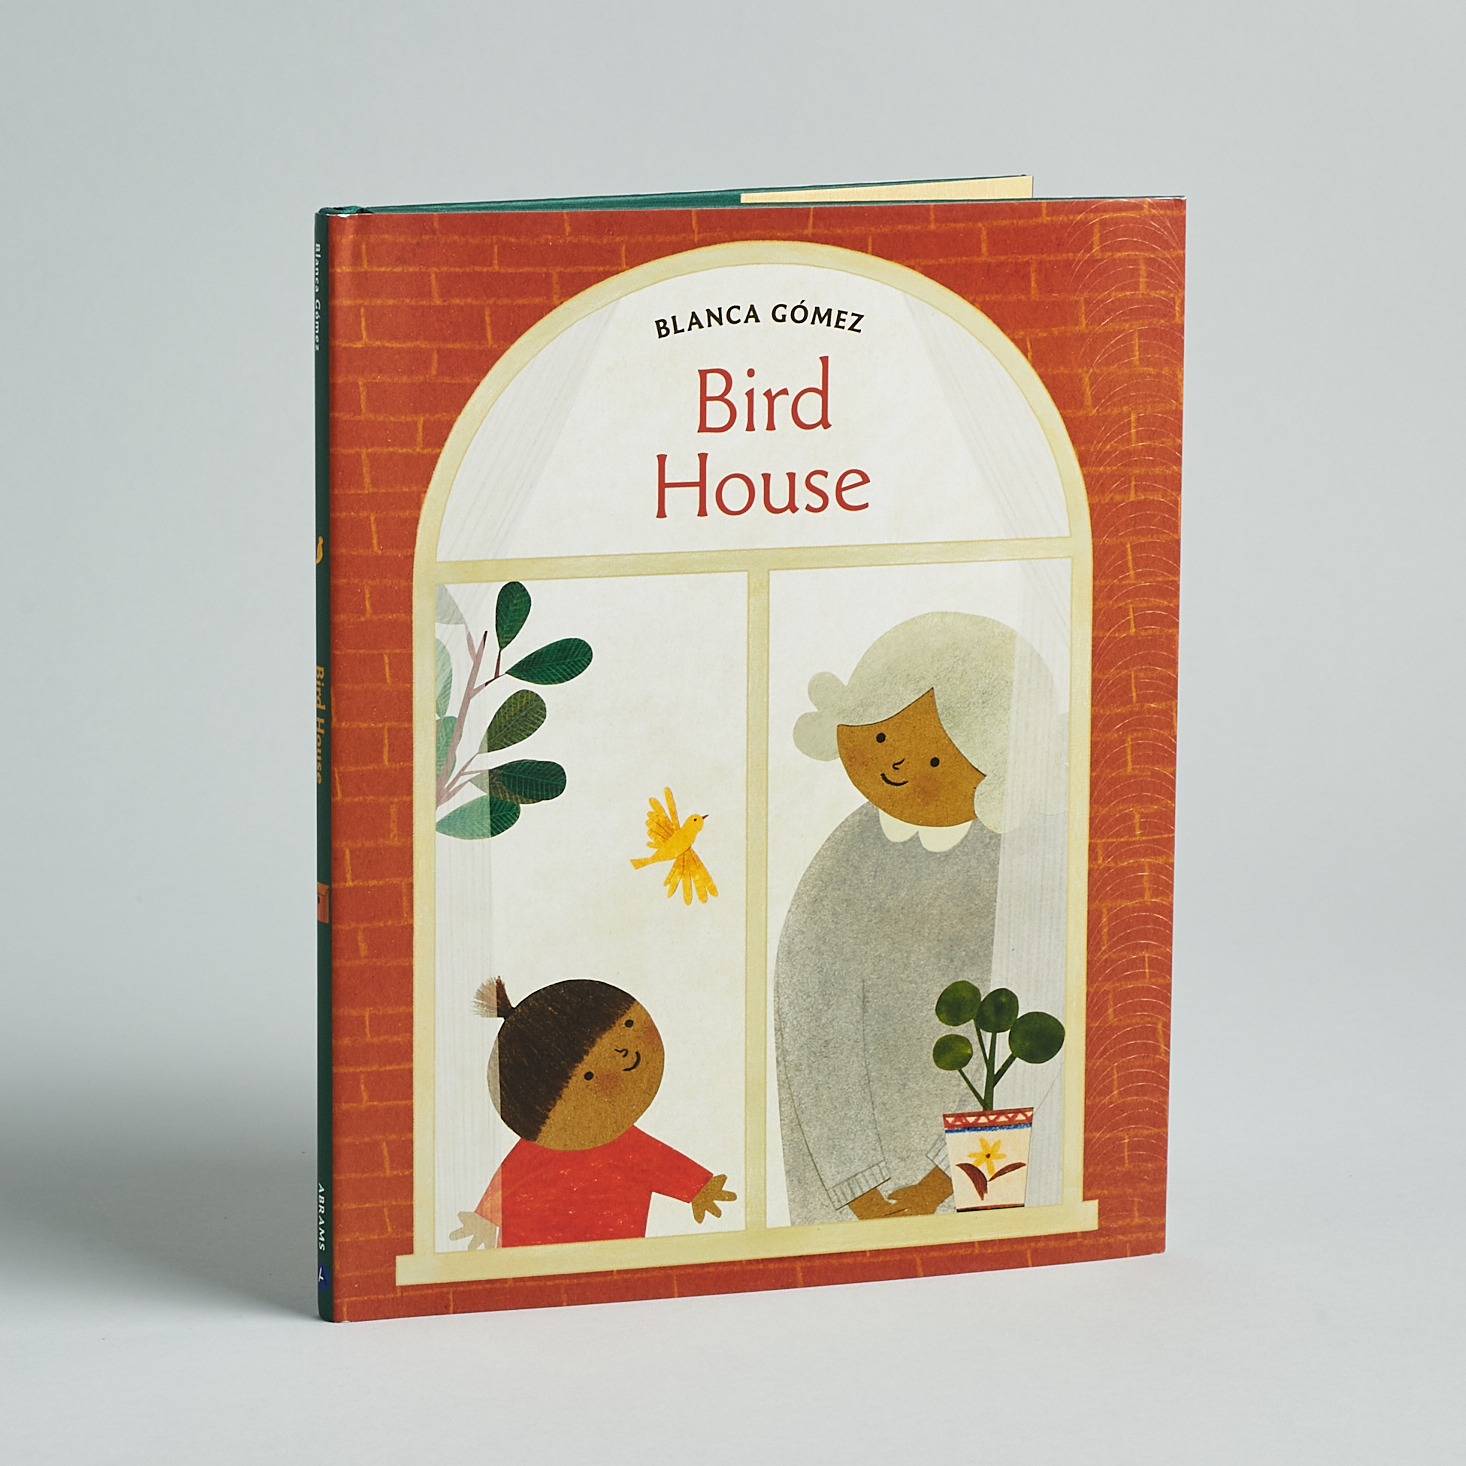 Little Feminist 2-4 June 2021 Bird House book